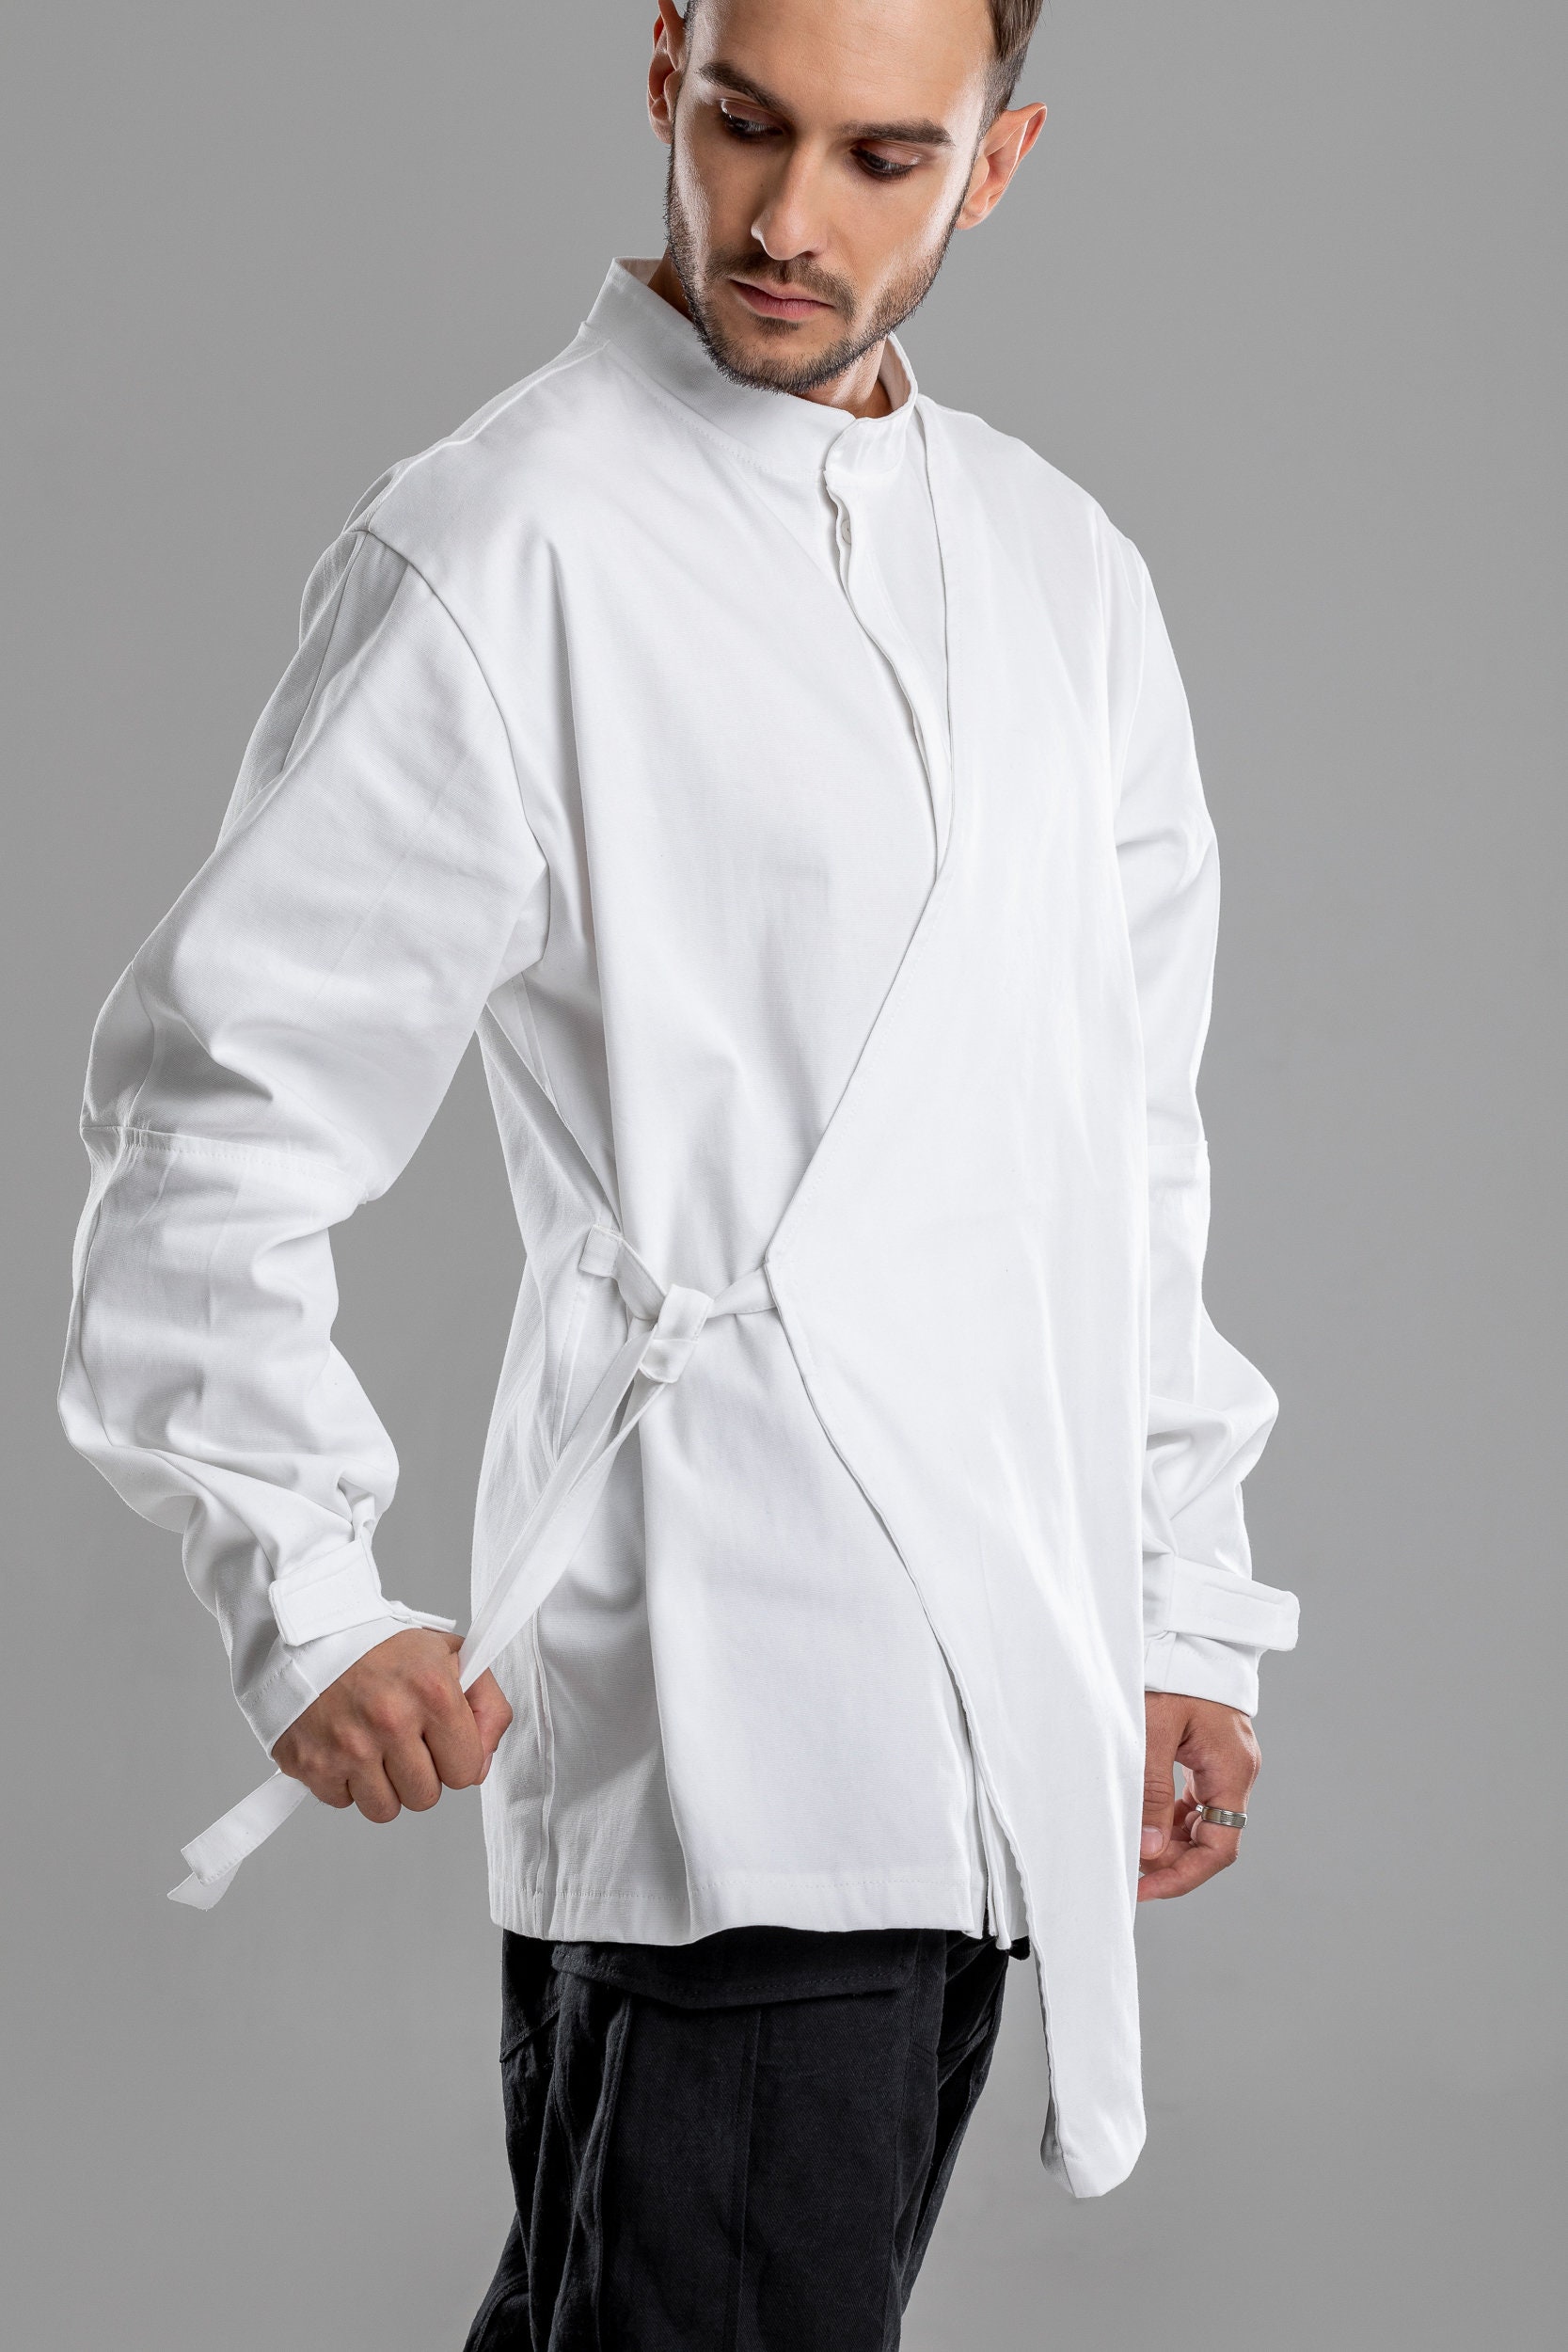 White asymmetric shirt men kimono cardigan casual urban | Etsy